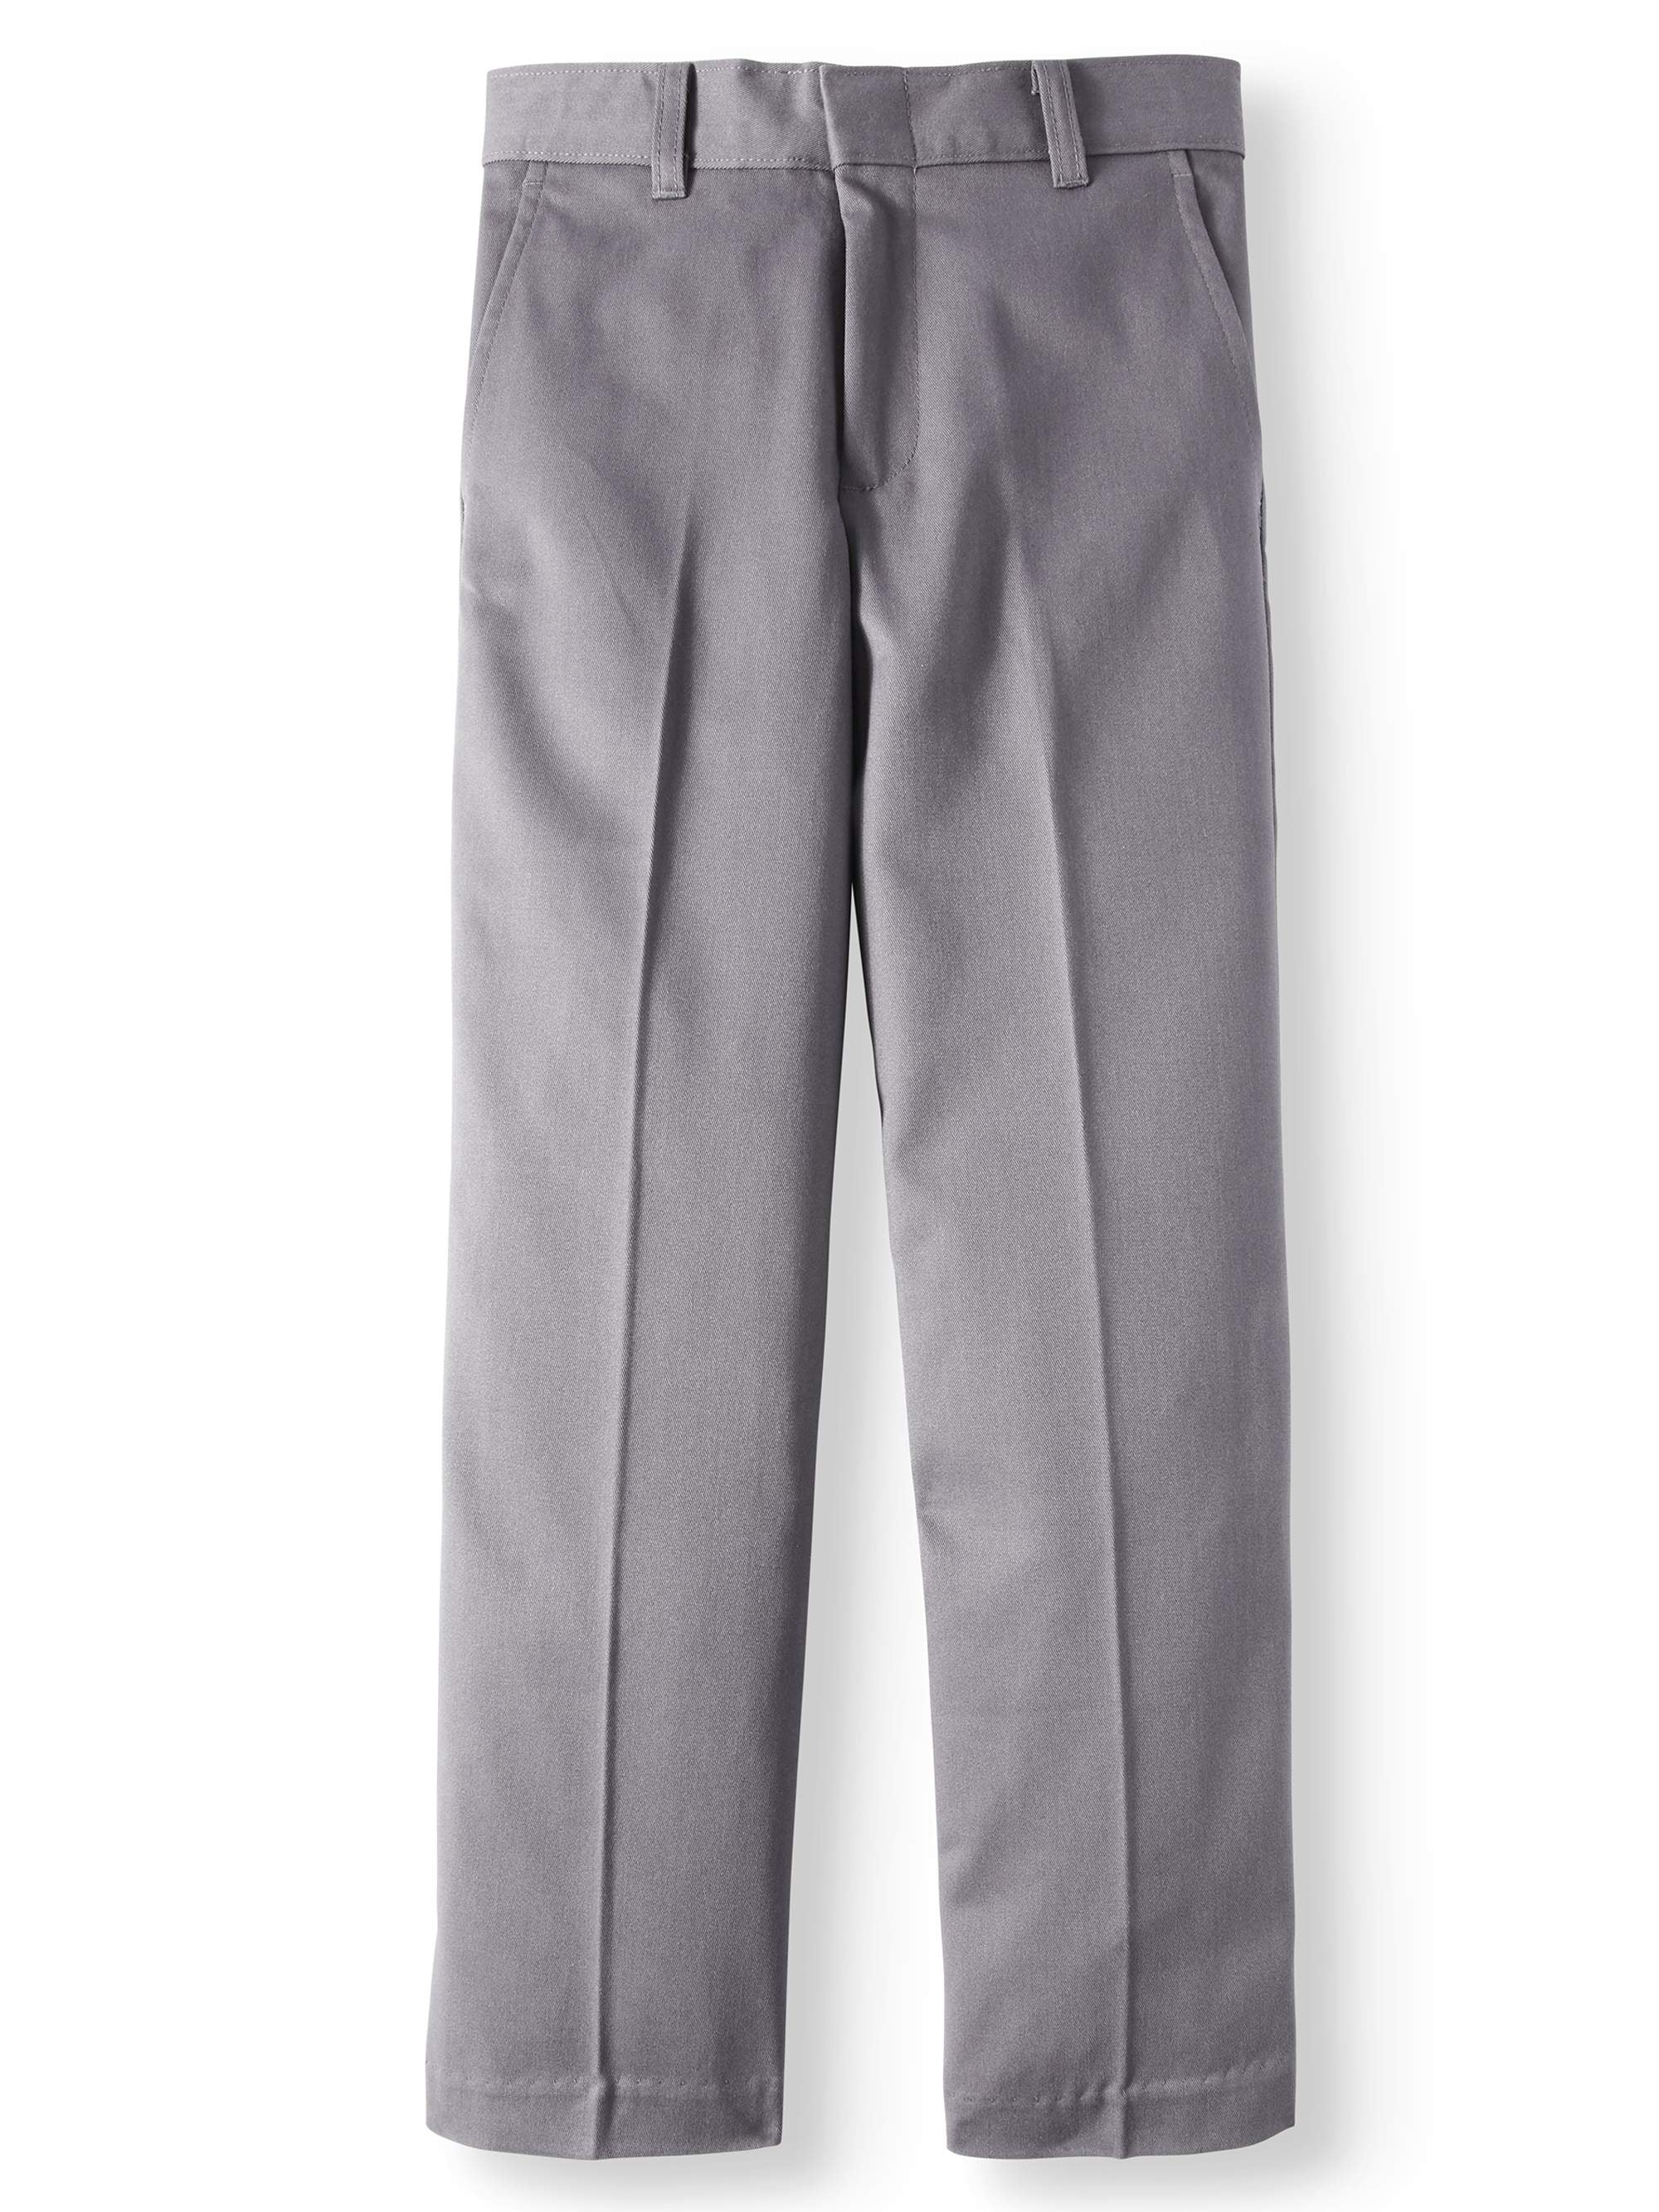 George Boys' School Uniforms Slim Flat Front Pants Size 8 Slim 